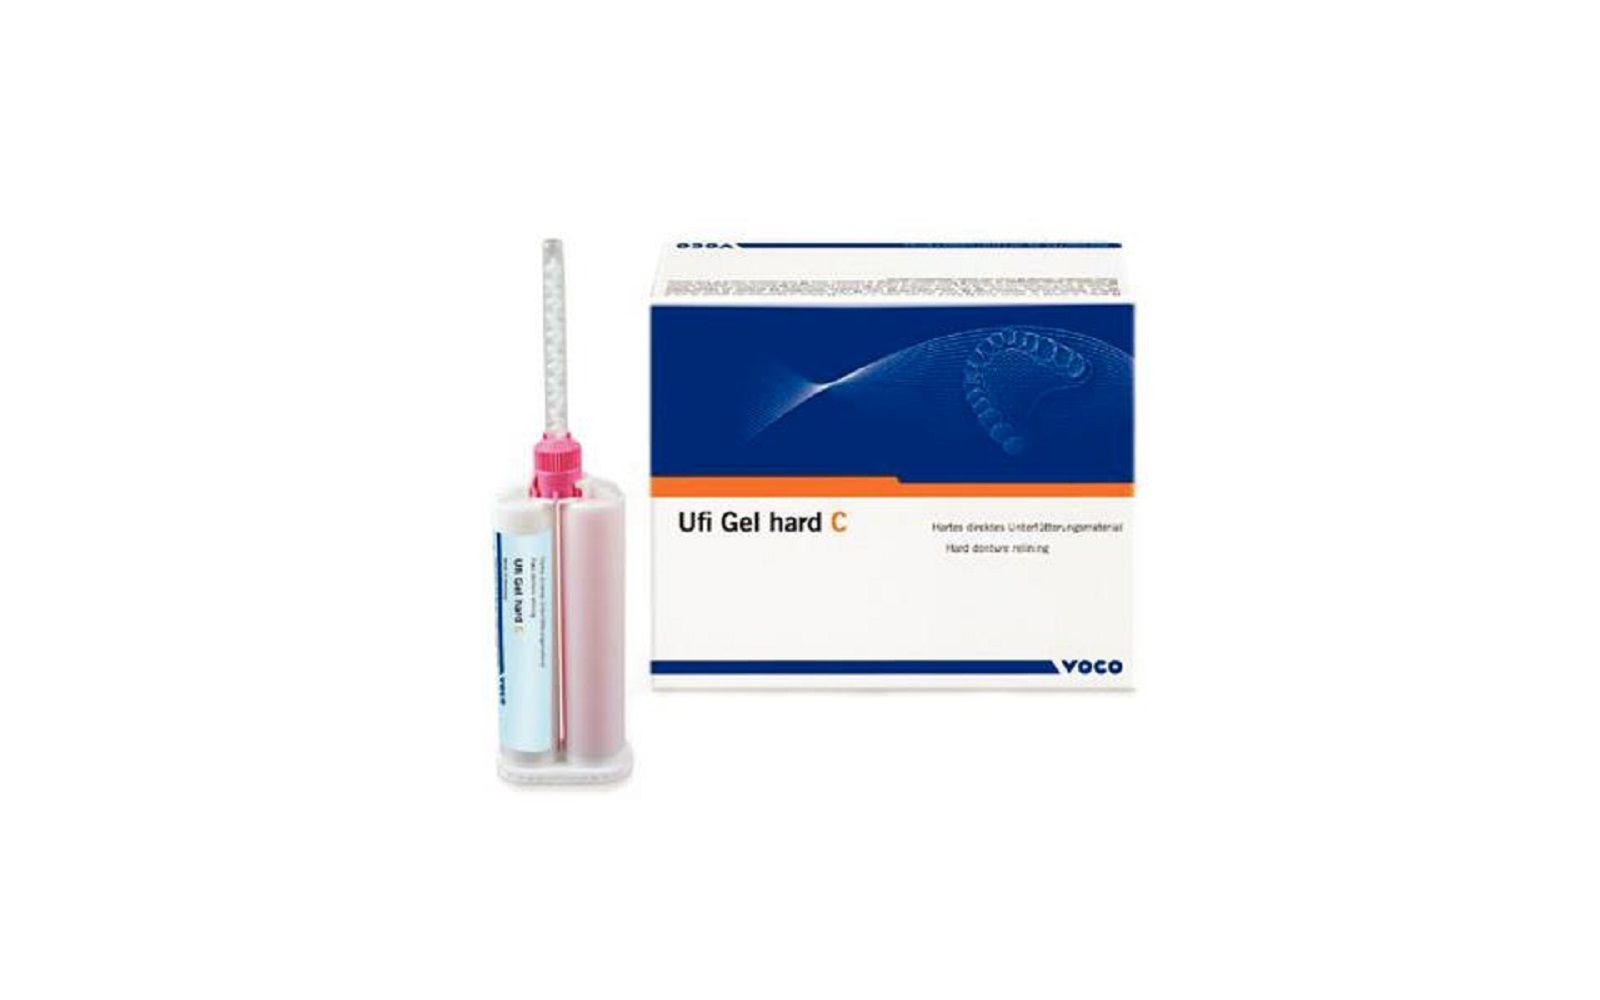 Ufi gel hard c denture lining material – 80 g cartridge refill